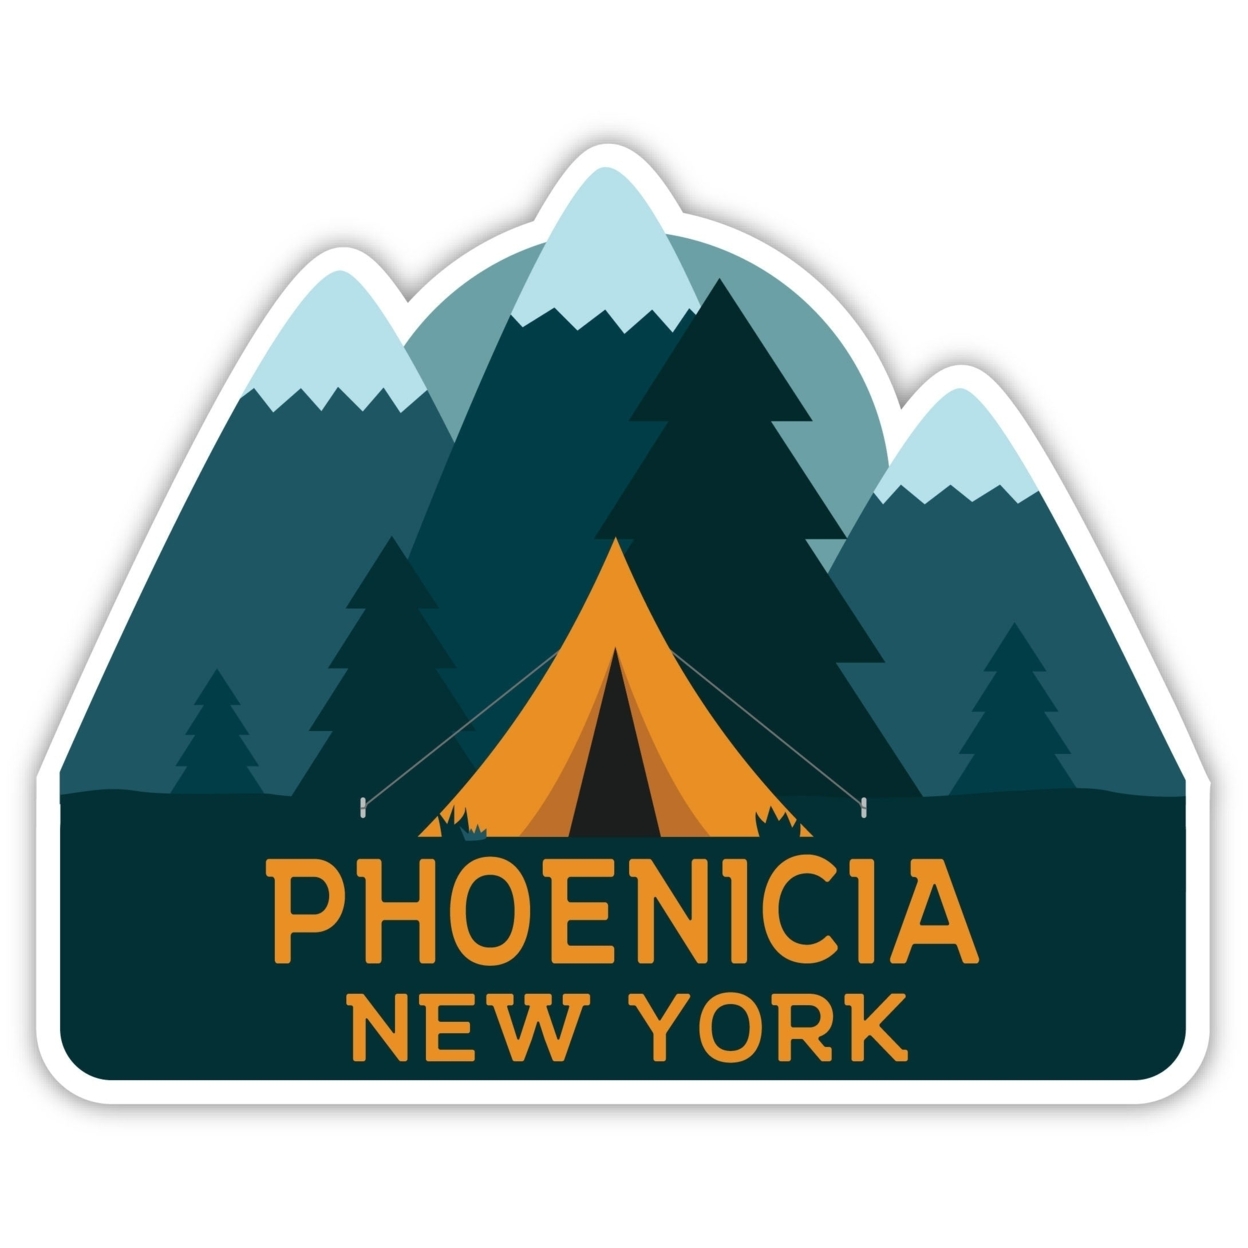 Phoenicia New York Souvenir Decorative Stickers (Choose Theme And Size) - Single Unit, 2-Inch, Tent